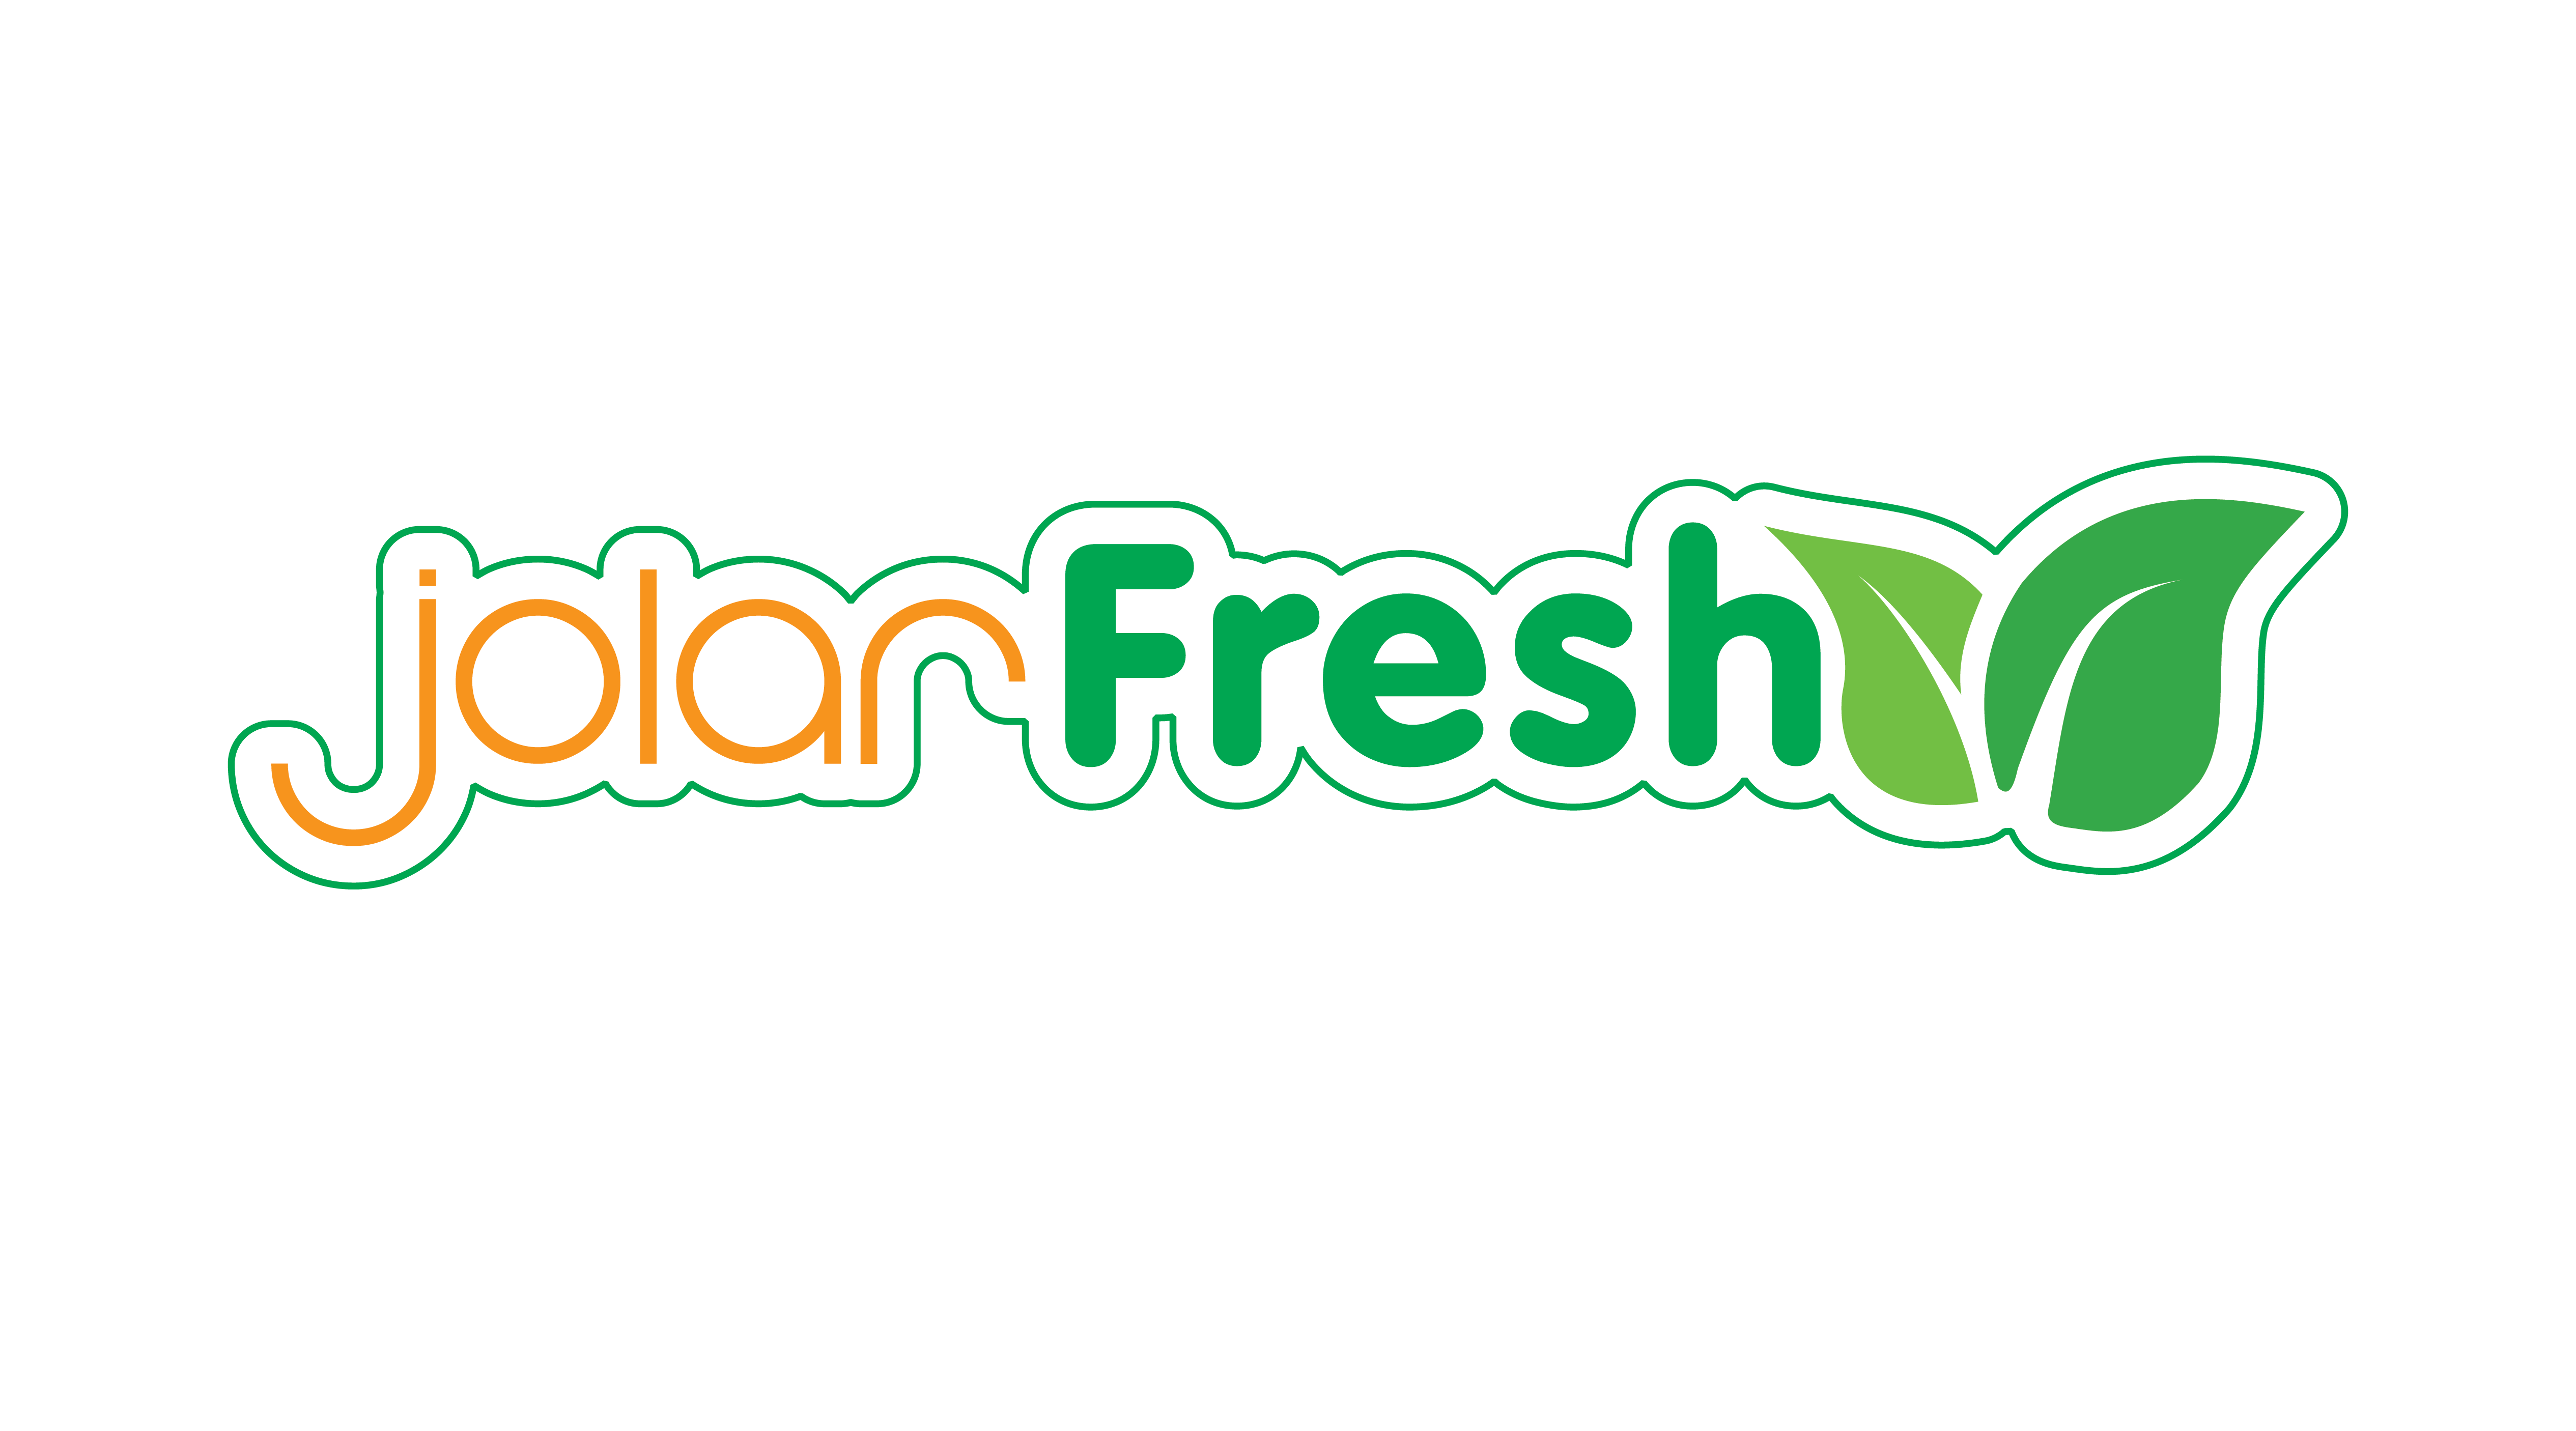 Logo Jolar Fresh